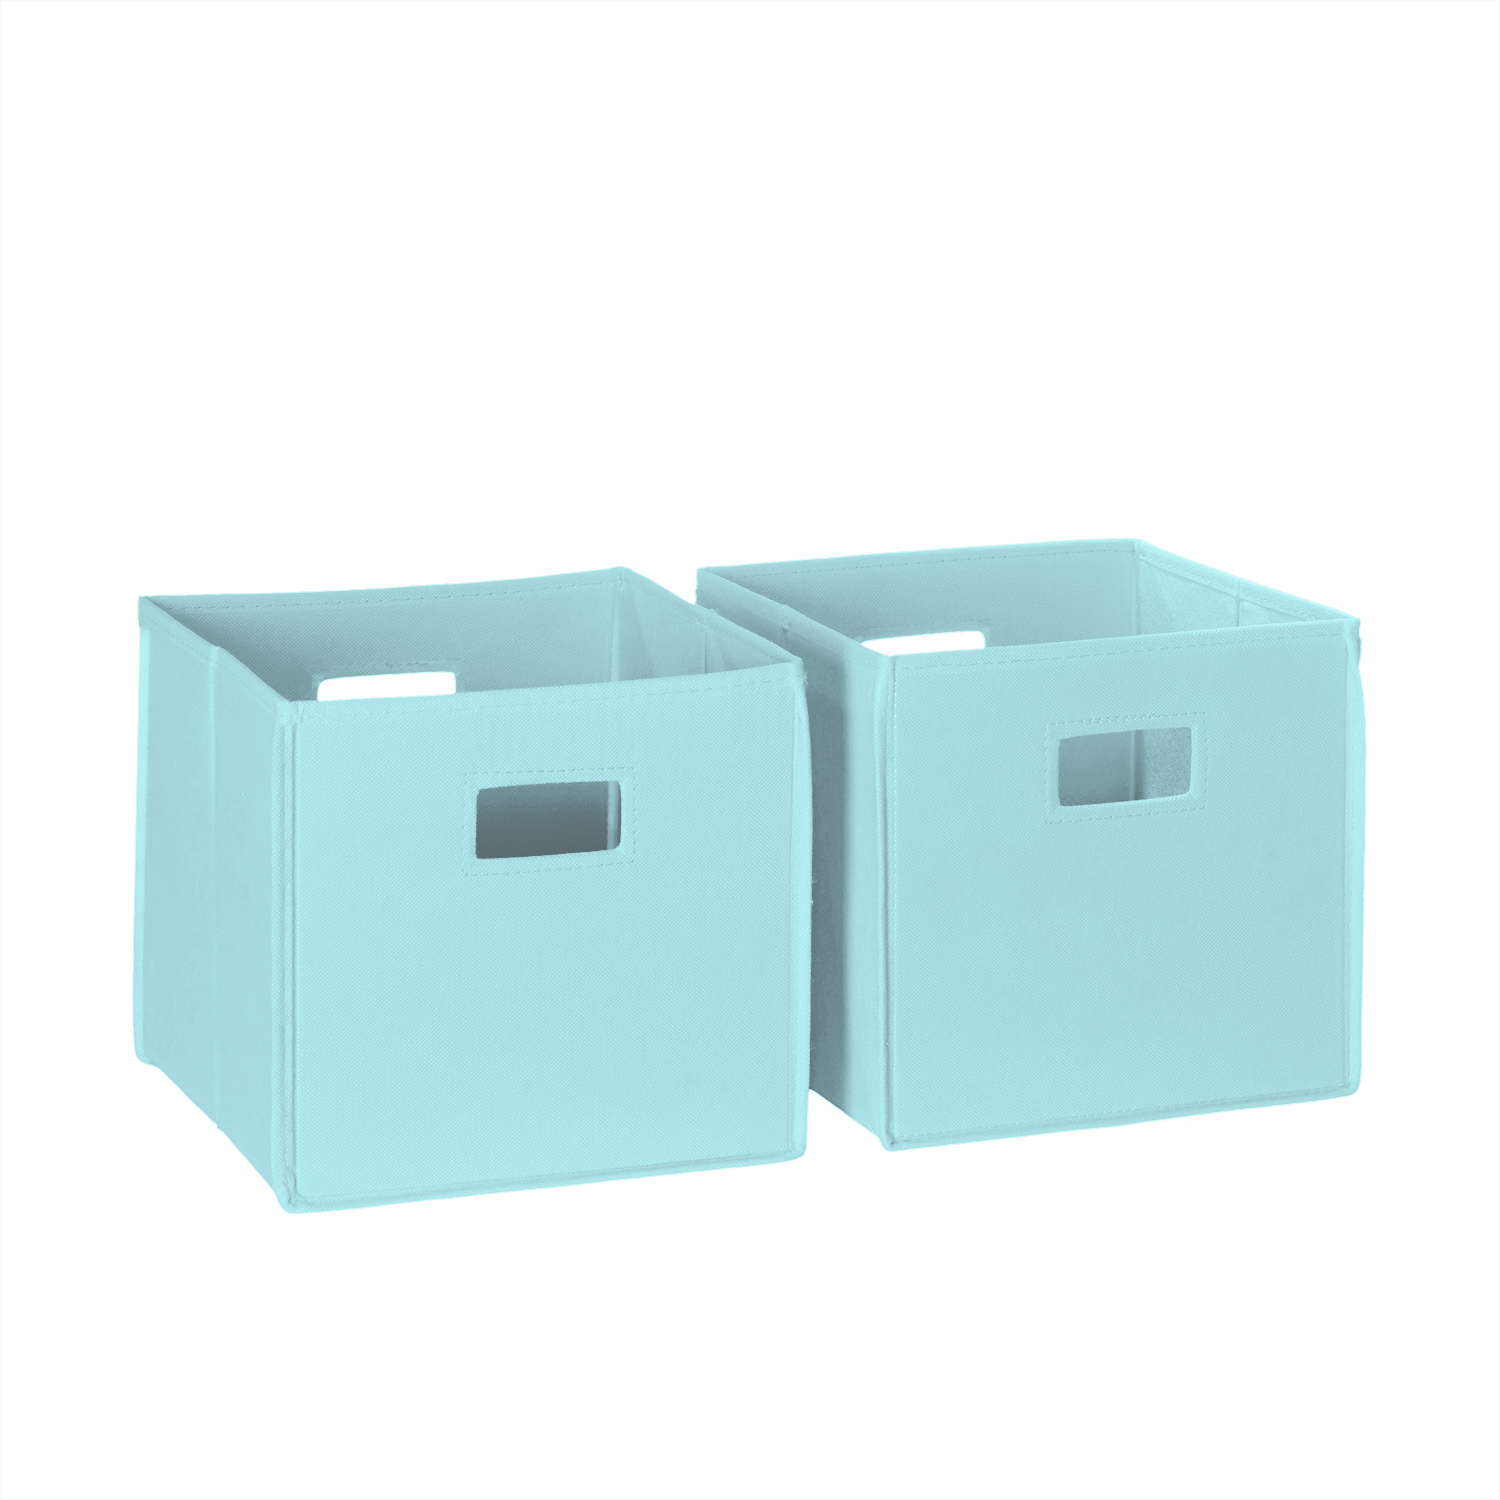 RiverRidge Home Folding Fabric Cube Storage Bin Set of 2 - Aqua - image 1 of 9